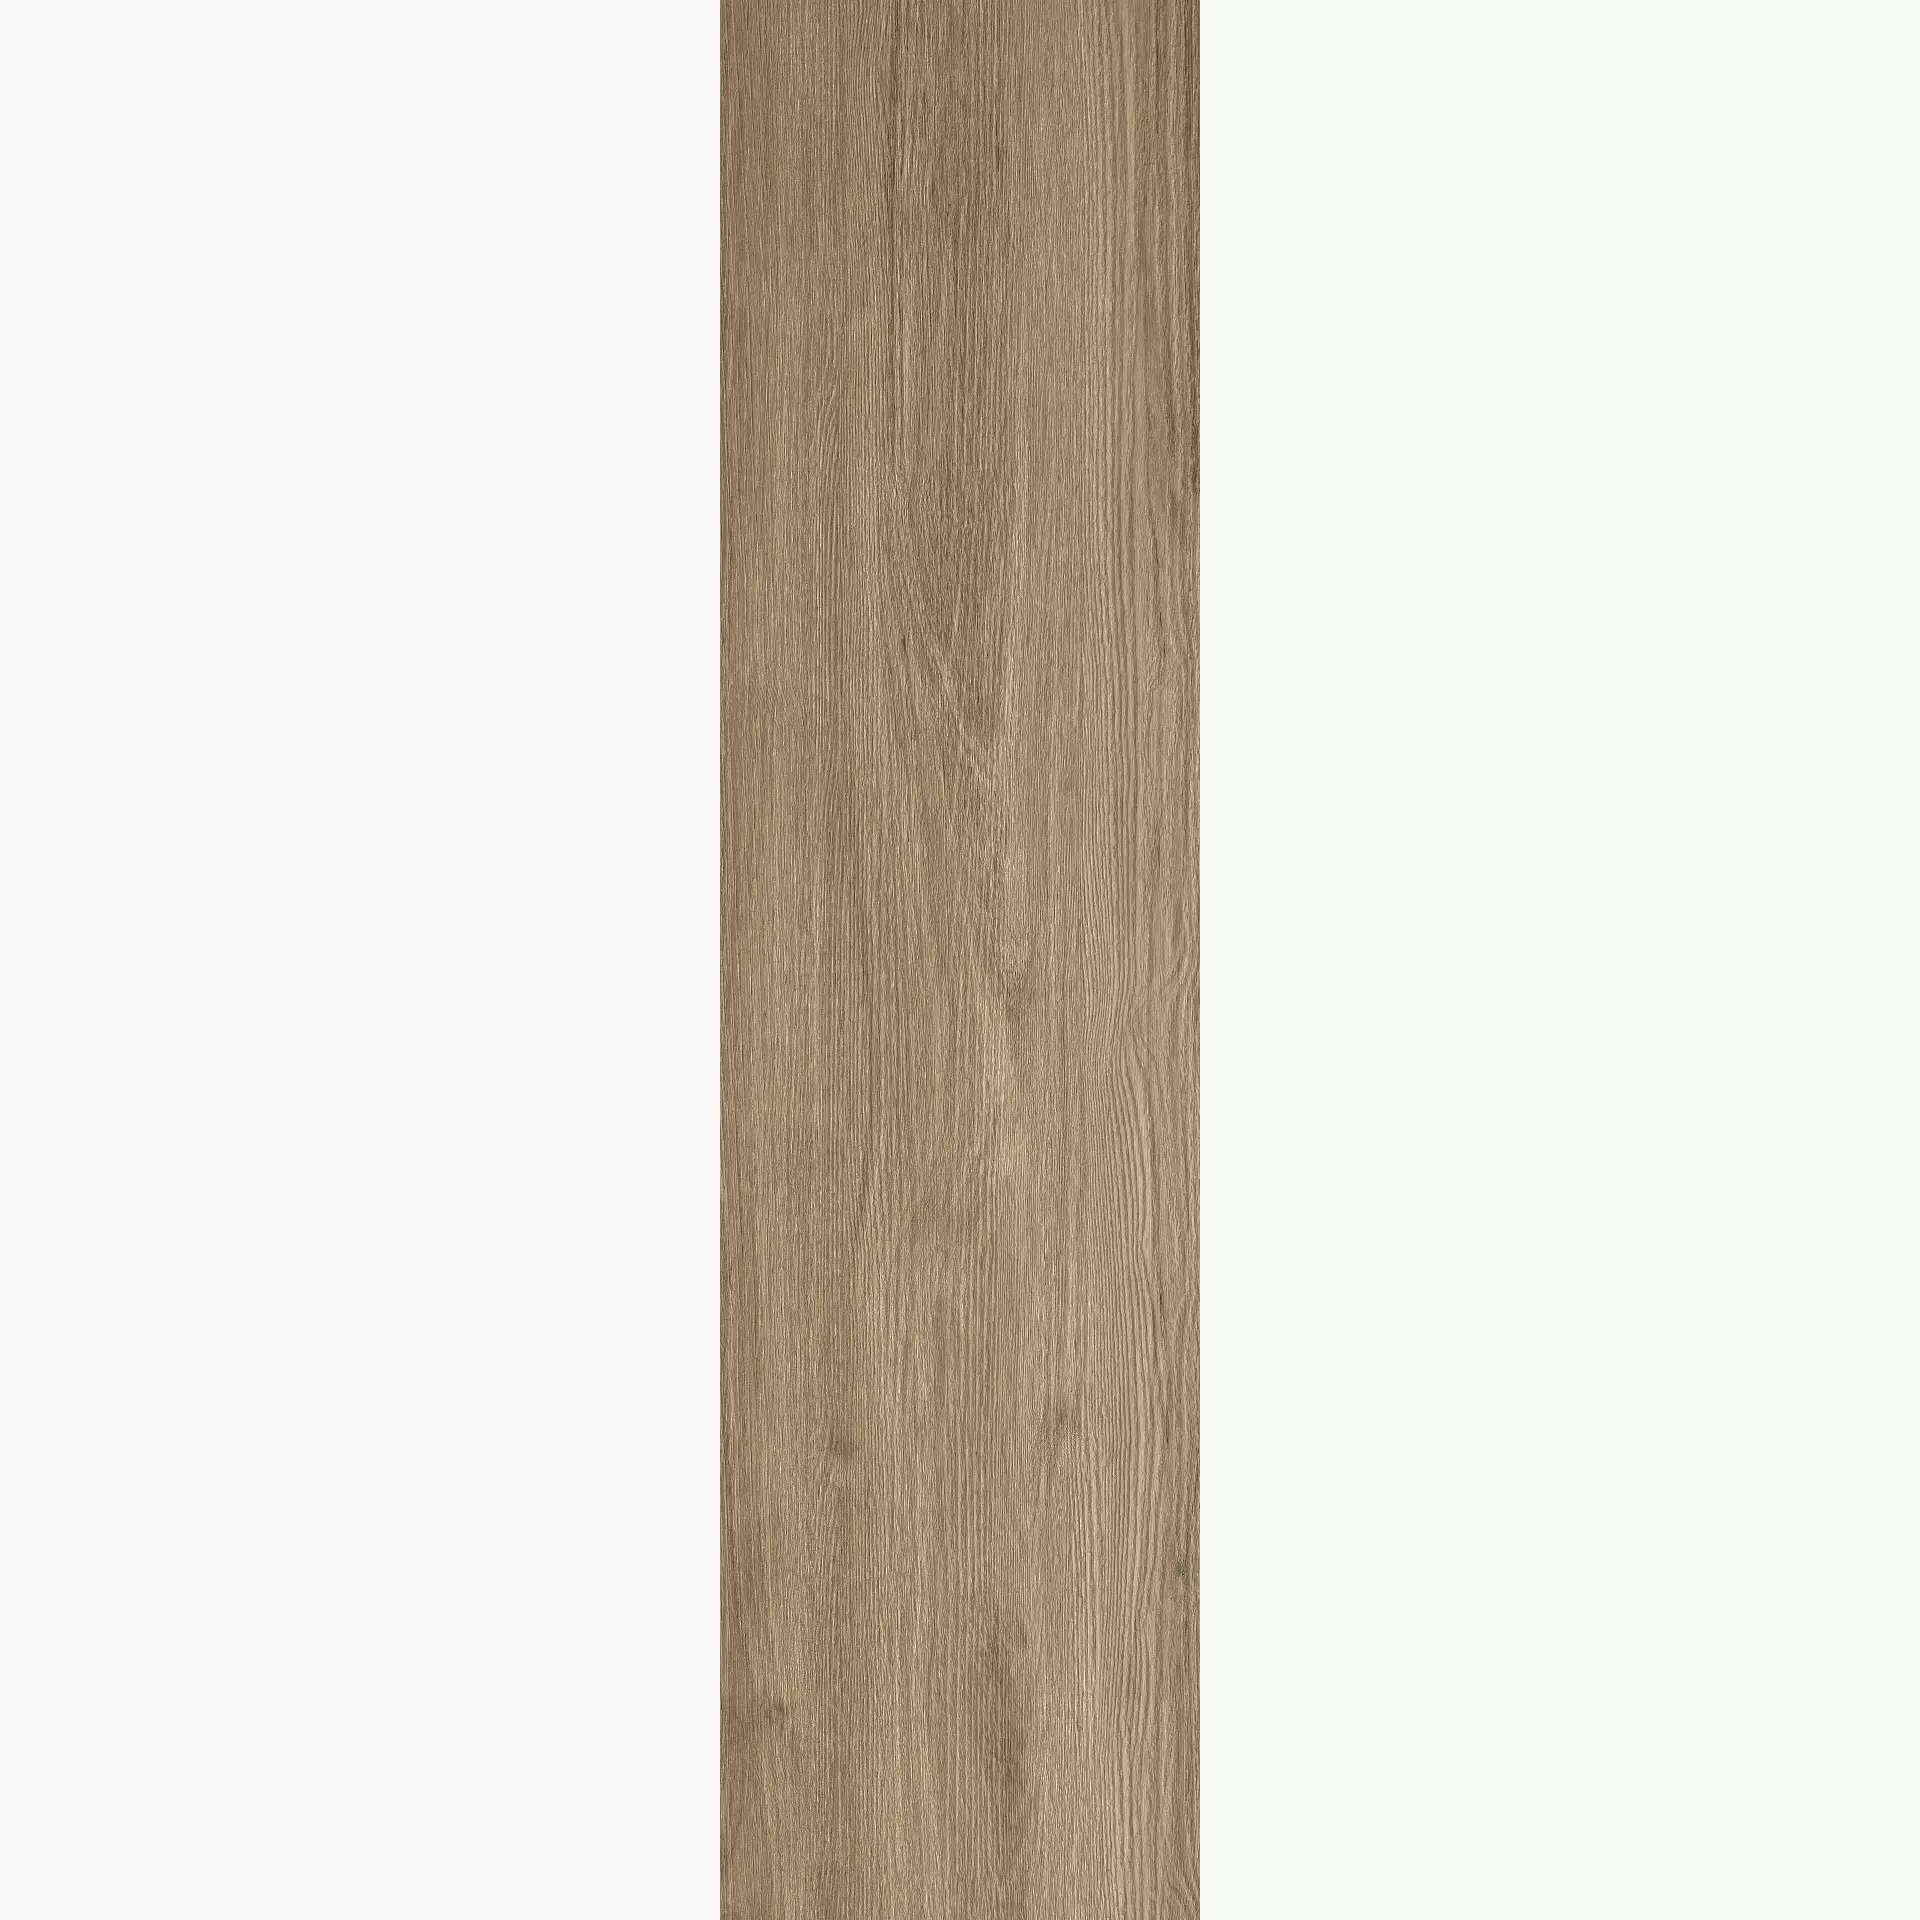 La Faenza Dama Hazelnut Natural Slate Cut Matt Outdoor Floor 183351 30x120cm rectified 20mm - DAMA3012NO ASRM